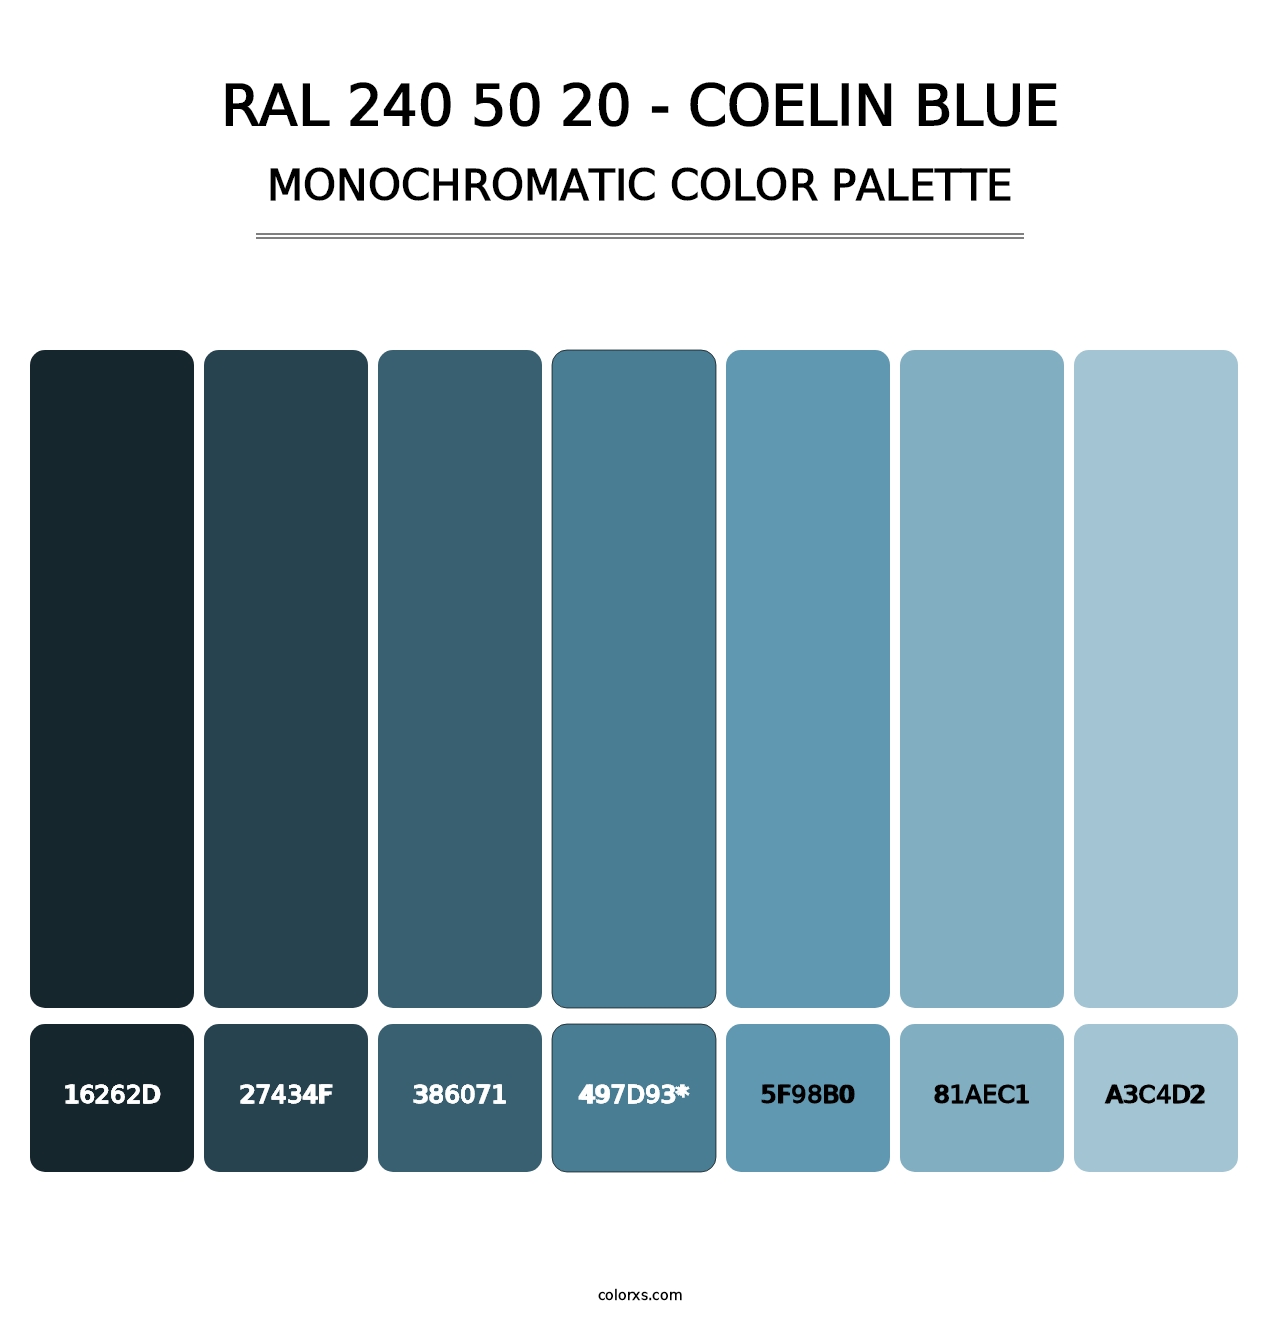 RAL 240 50 20 - Coelin Blue - Monochromatic Color Palette